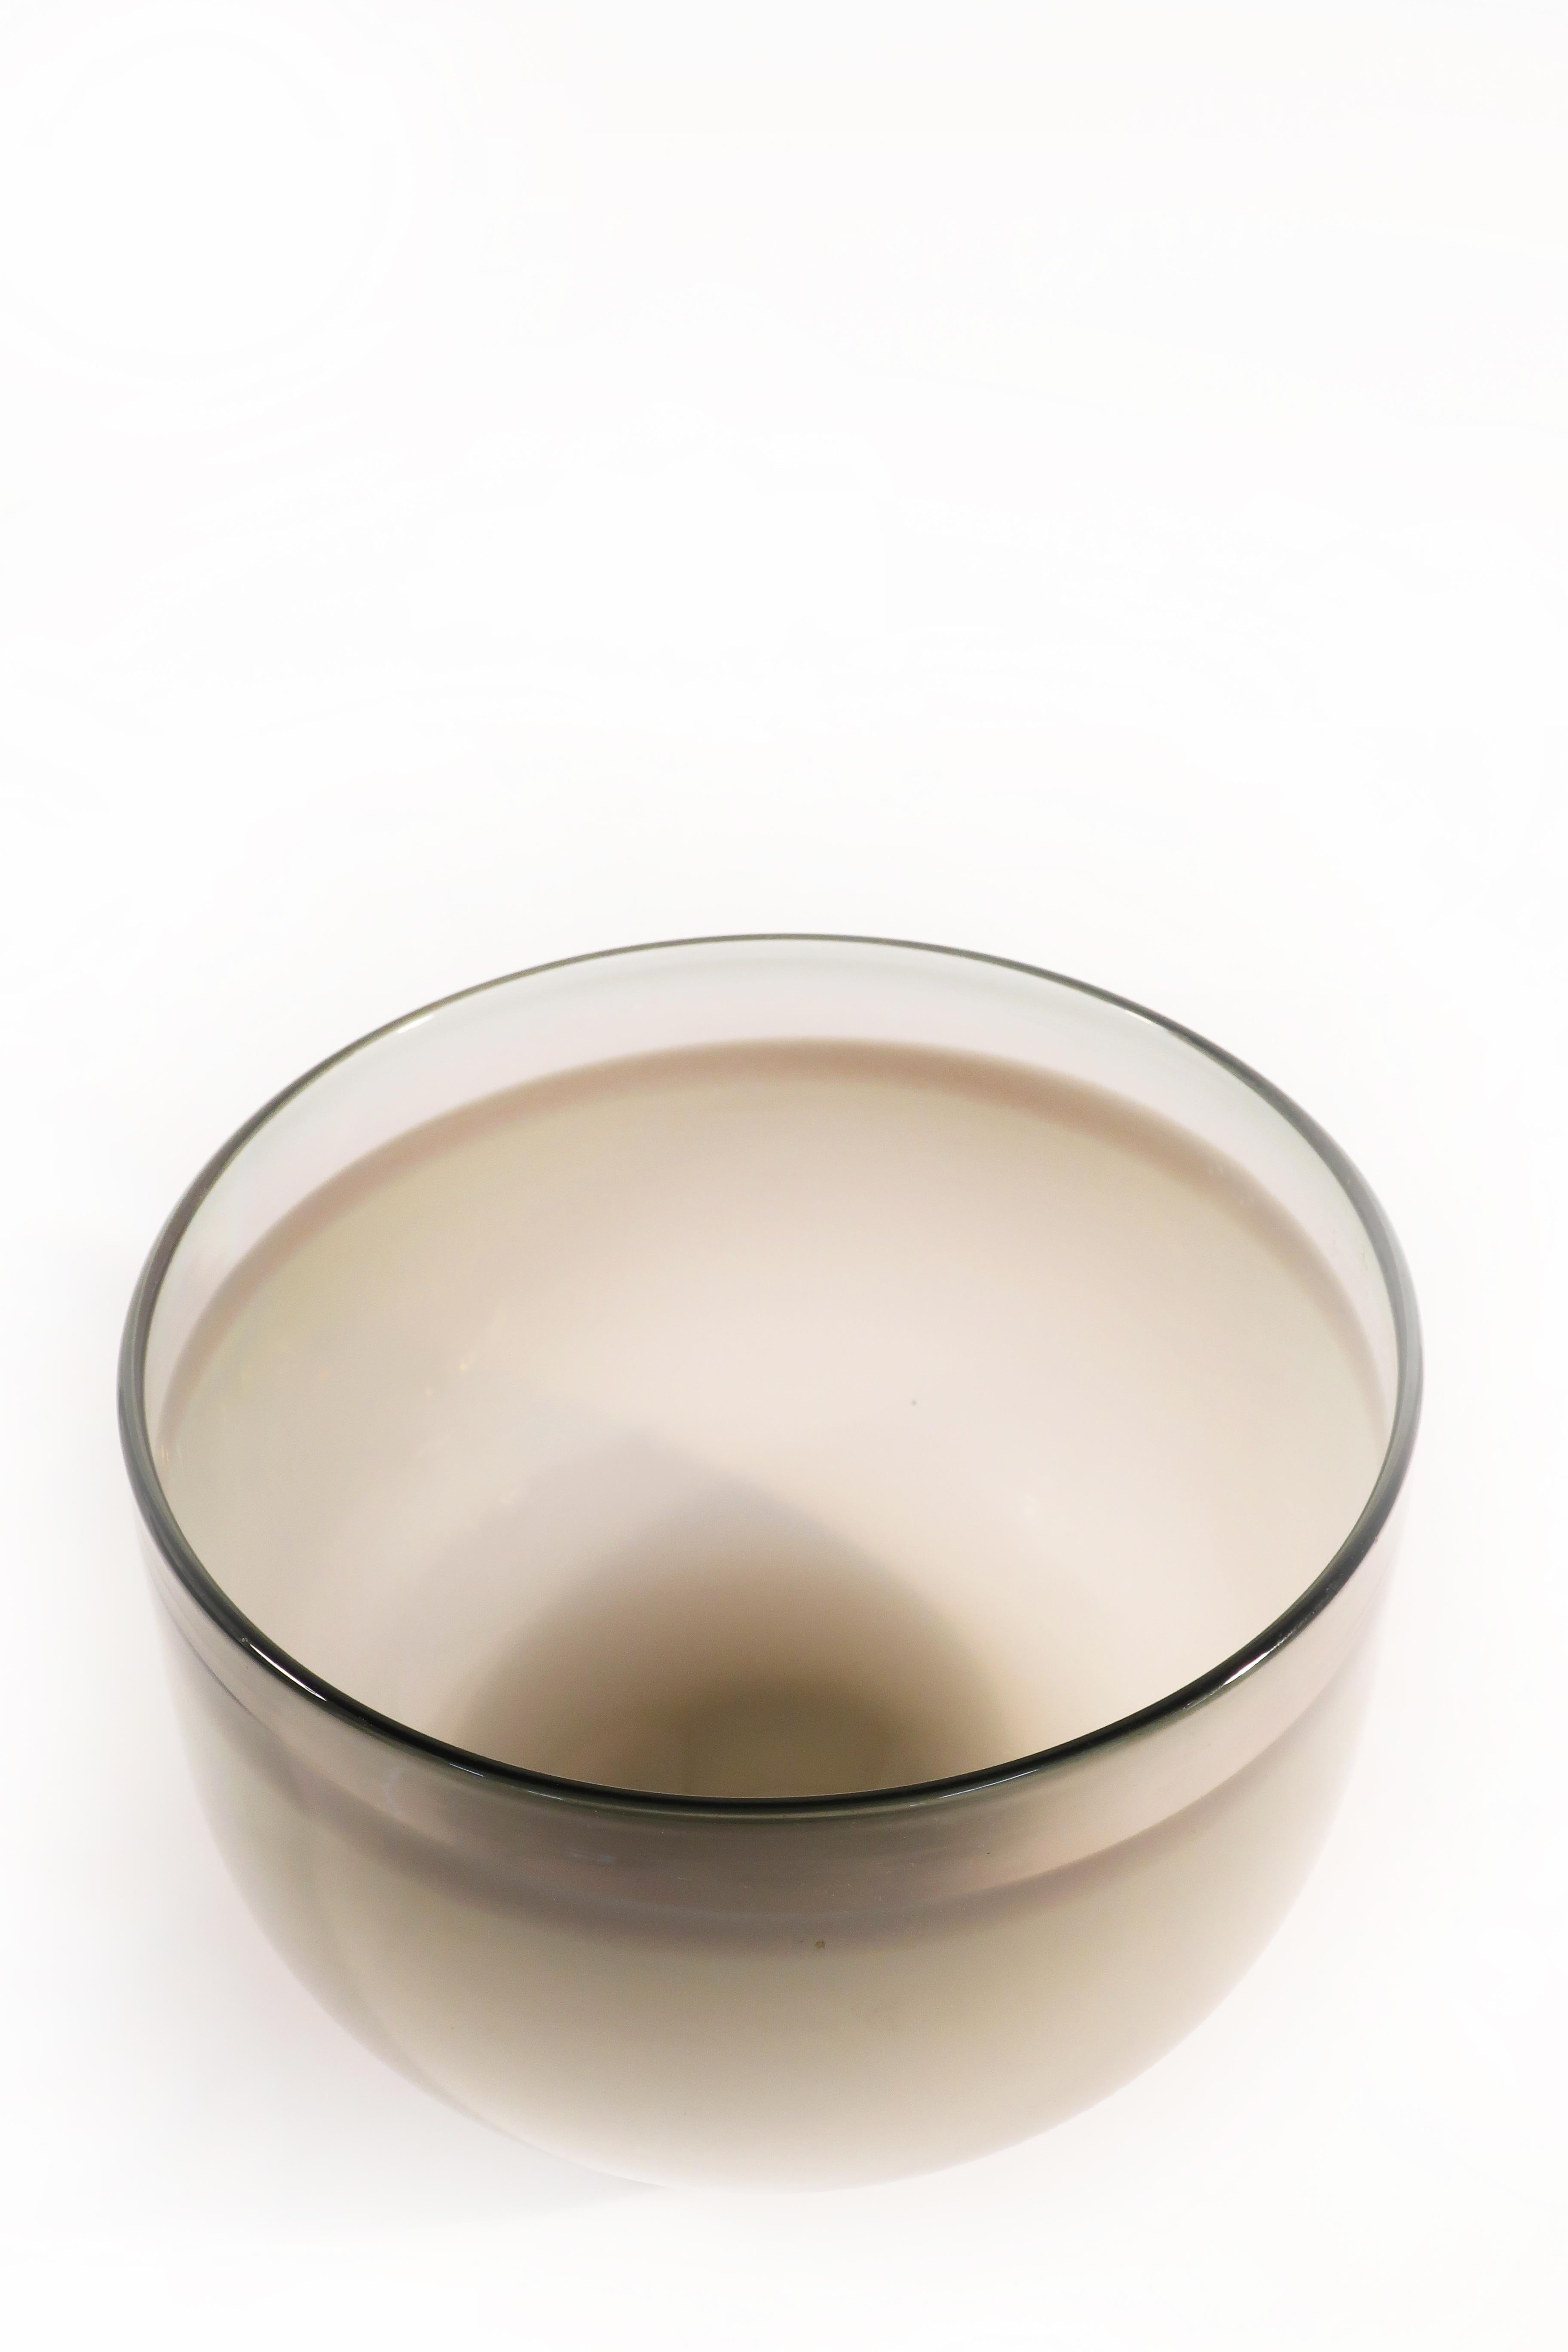 Art Glass White and Gray Studio Glass Bowl by Guggisberg Baldwin For Sale